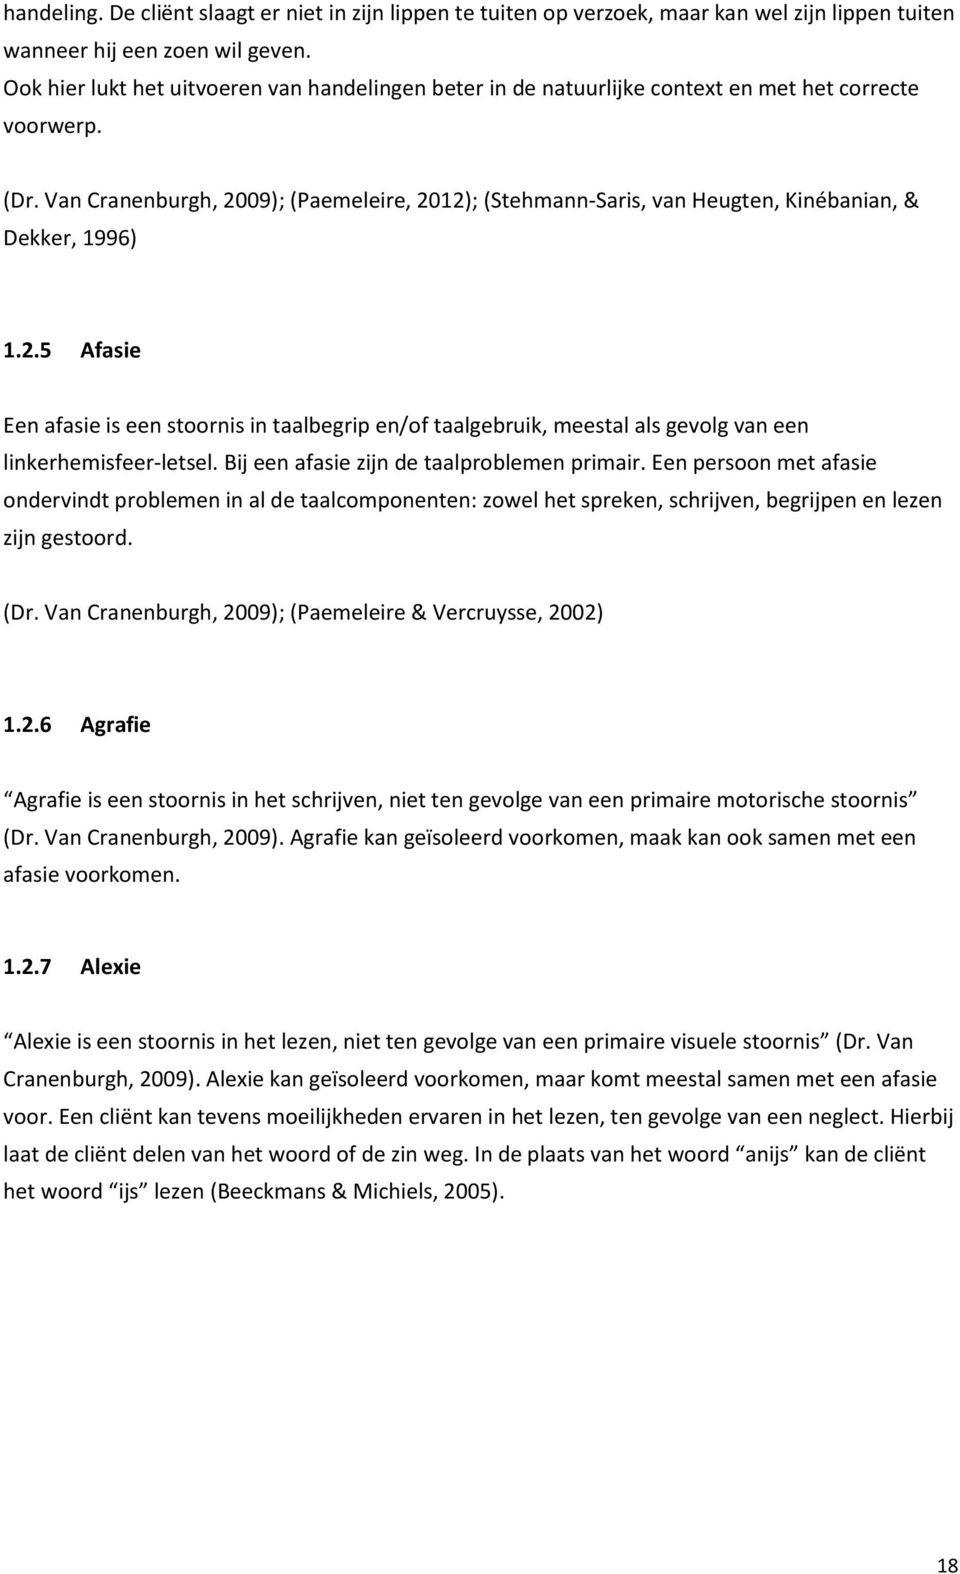 Van Cranenburgh, 2009); (Paemeleire, 2012); (Stehmann-Saris, van Heugten, Kinébanian, & Dekker, 1996) 1.2.5 Afasie Een afasie is een stoornis in taalbegrip en/of taalgebruik, meestal als gevolg van een linkerhemisfeer-letsel.